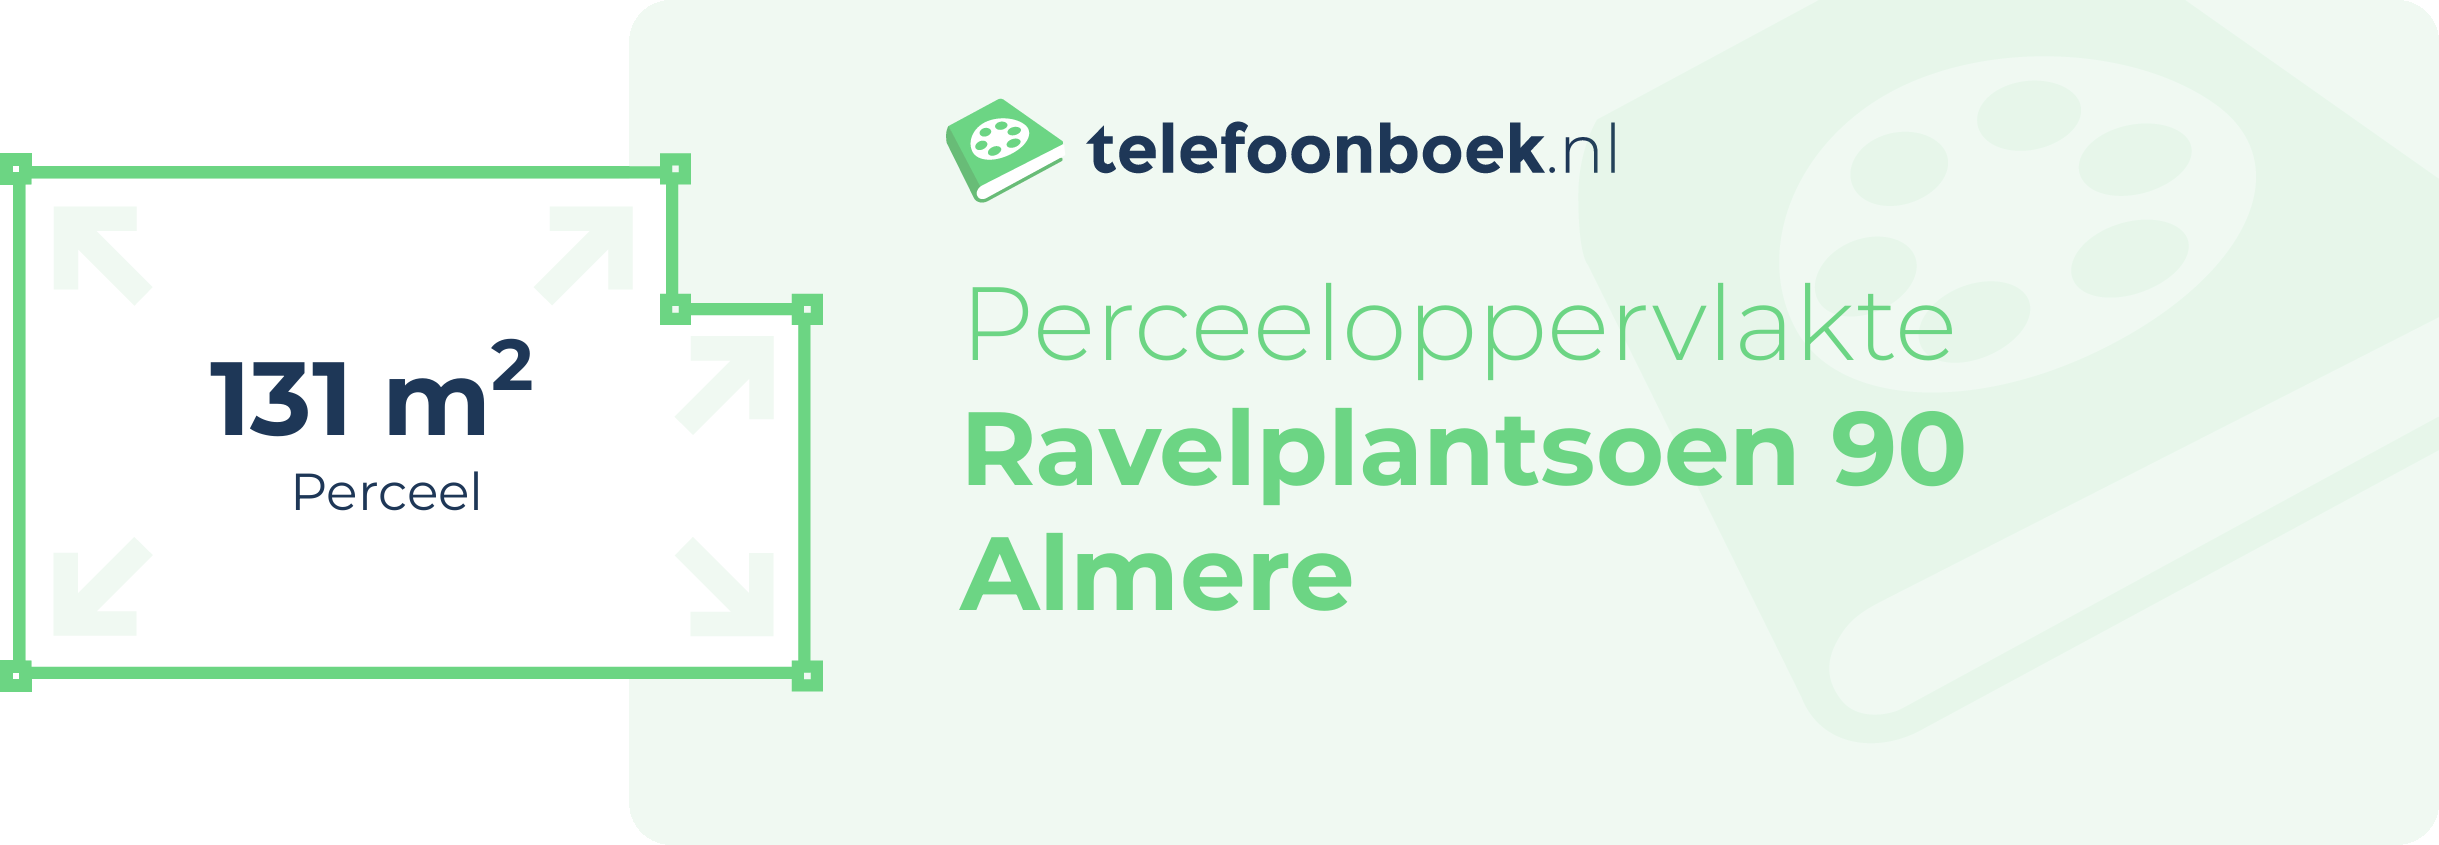 Perceeloppervlakte Ravelplantsoen 90 Almere